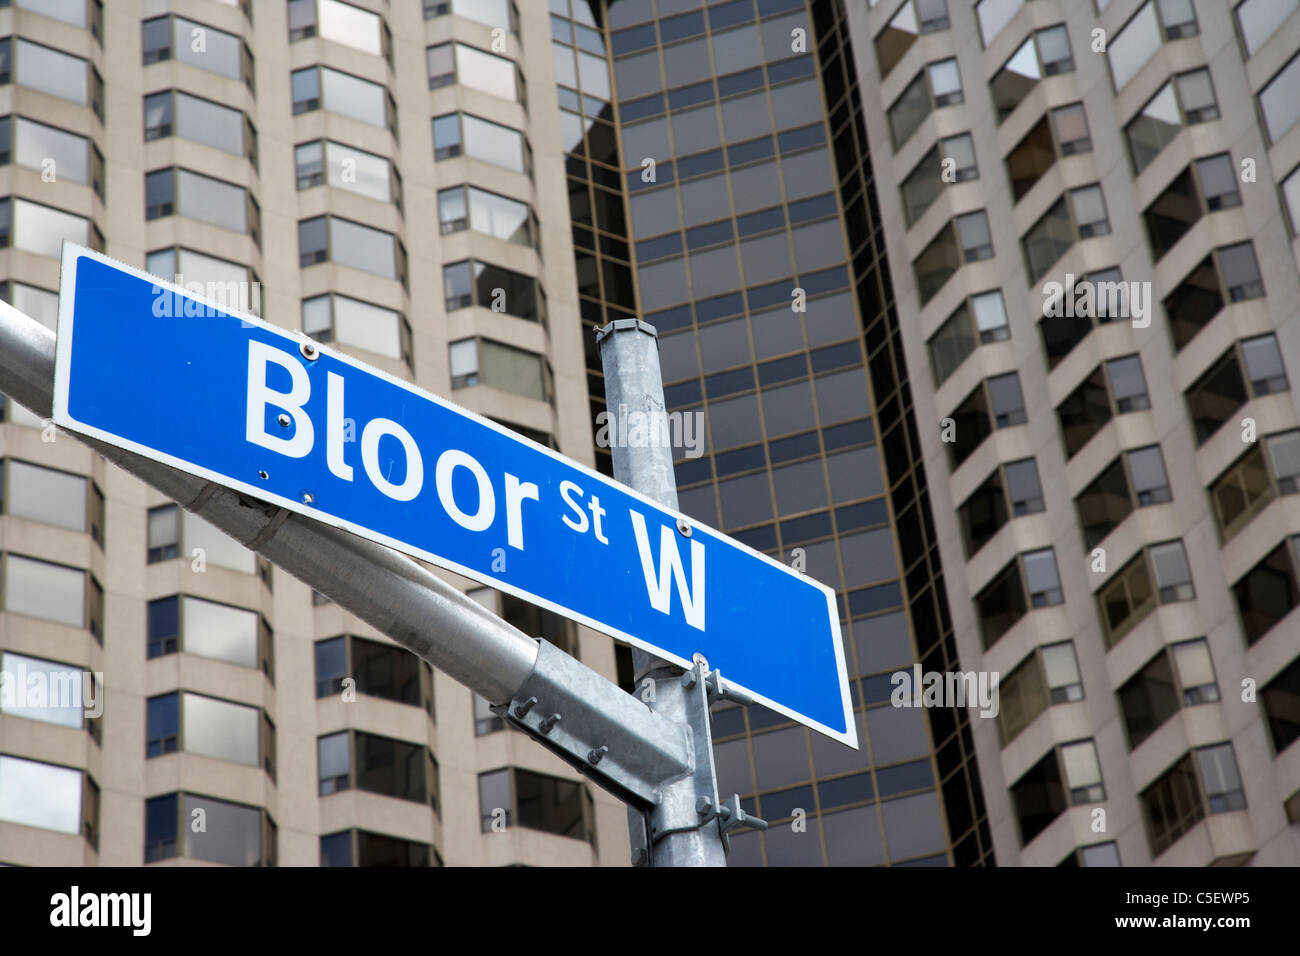 street sign for bloor street west in toronto ontario canada Stock Photo